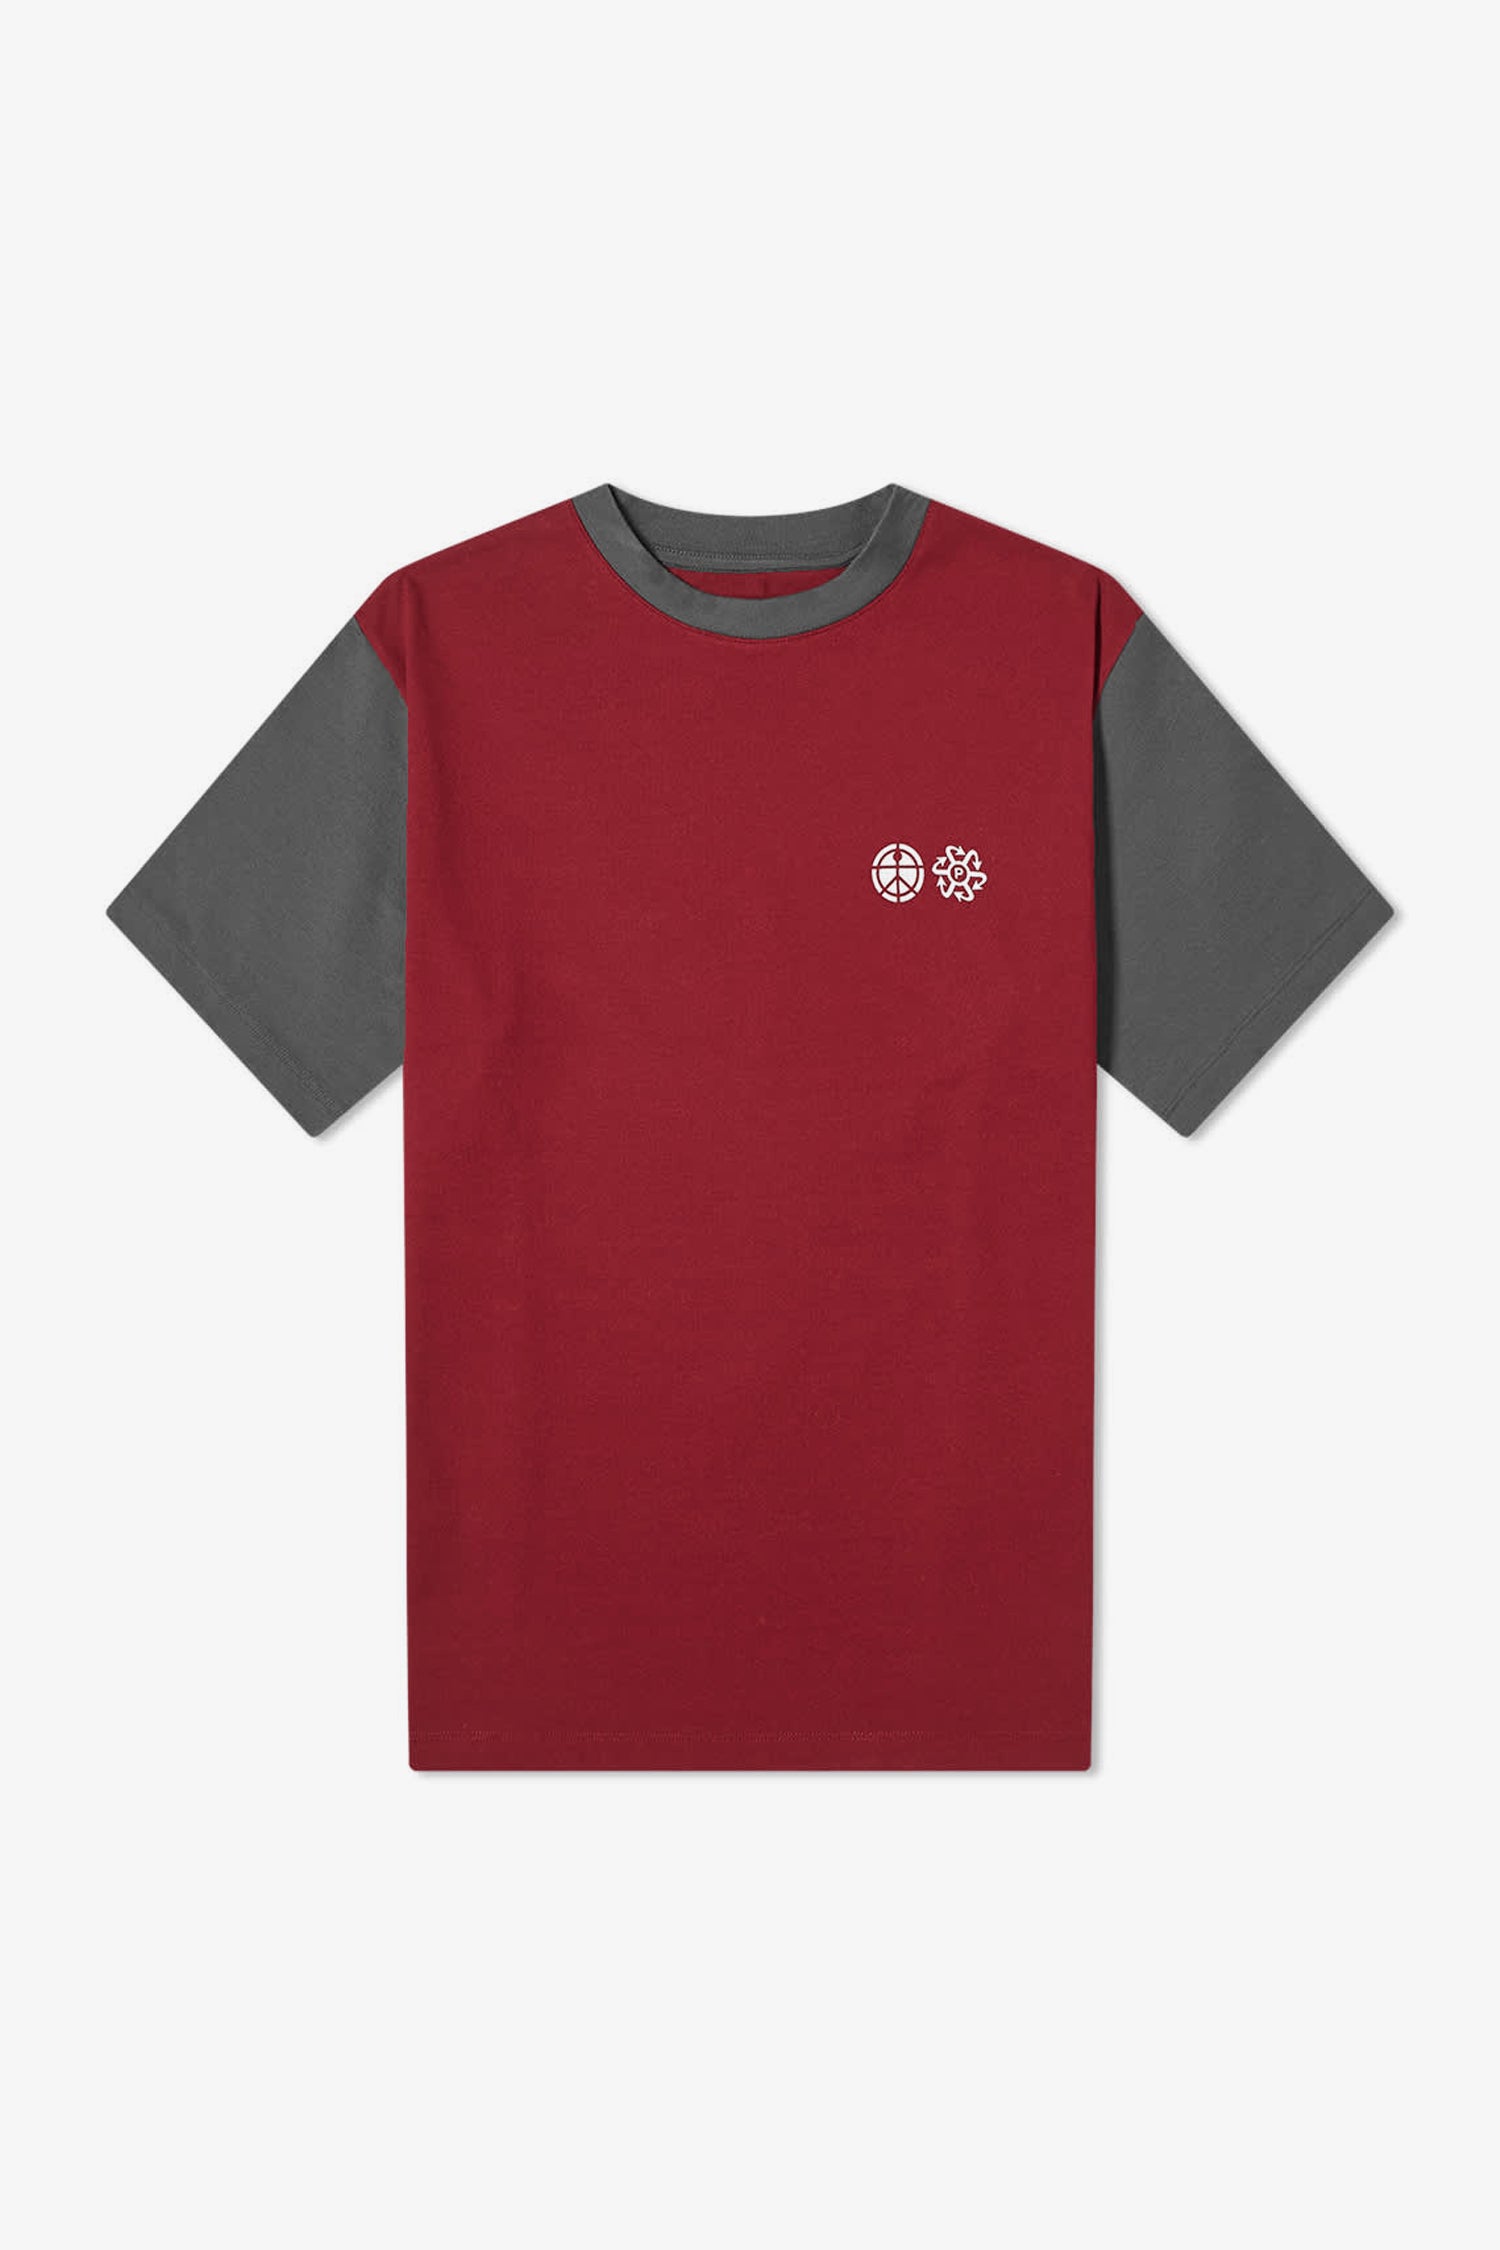 Selectshop FRAME - RASSVET Bicolor T-Shirt T-Shirt Dubai